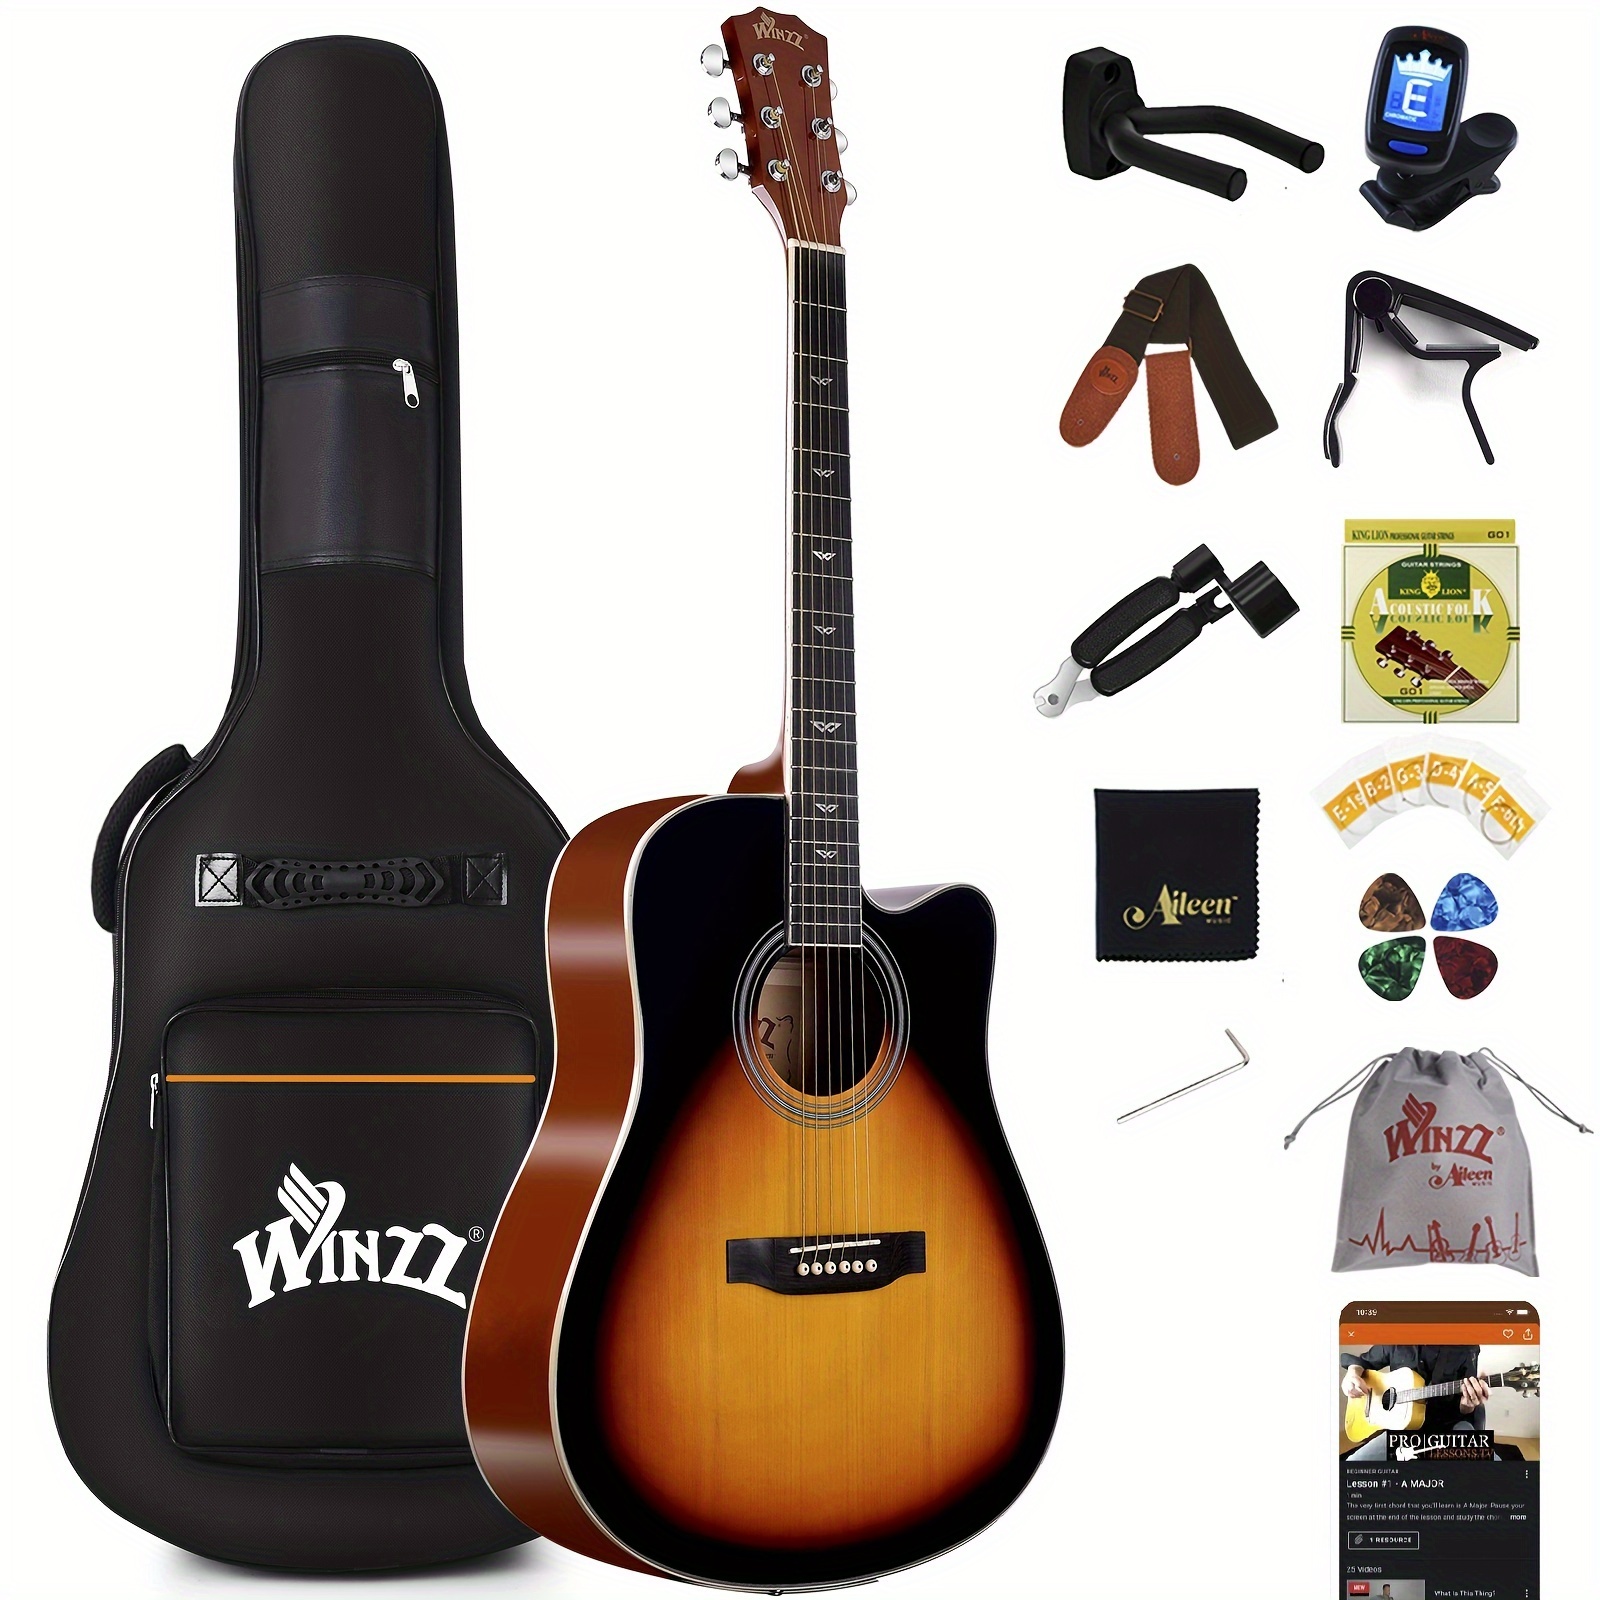 

Tg-a4 41inch Acoustic Guitar Package For Beginners Adult Teen - Starter Kit, Glossy Sunburst